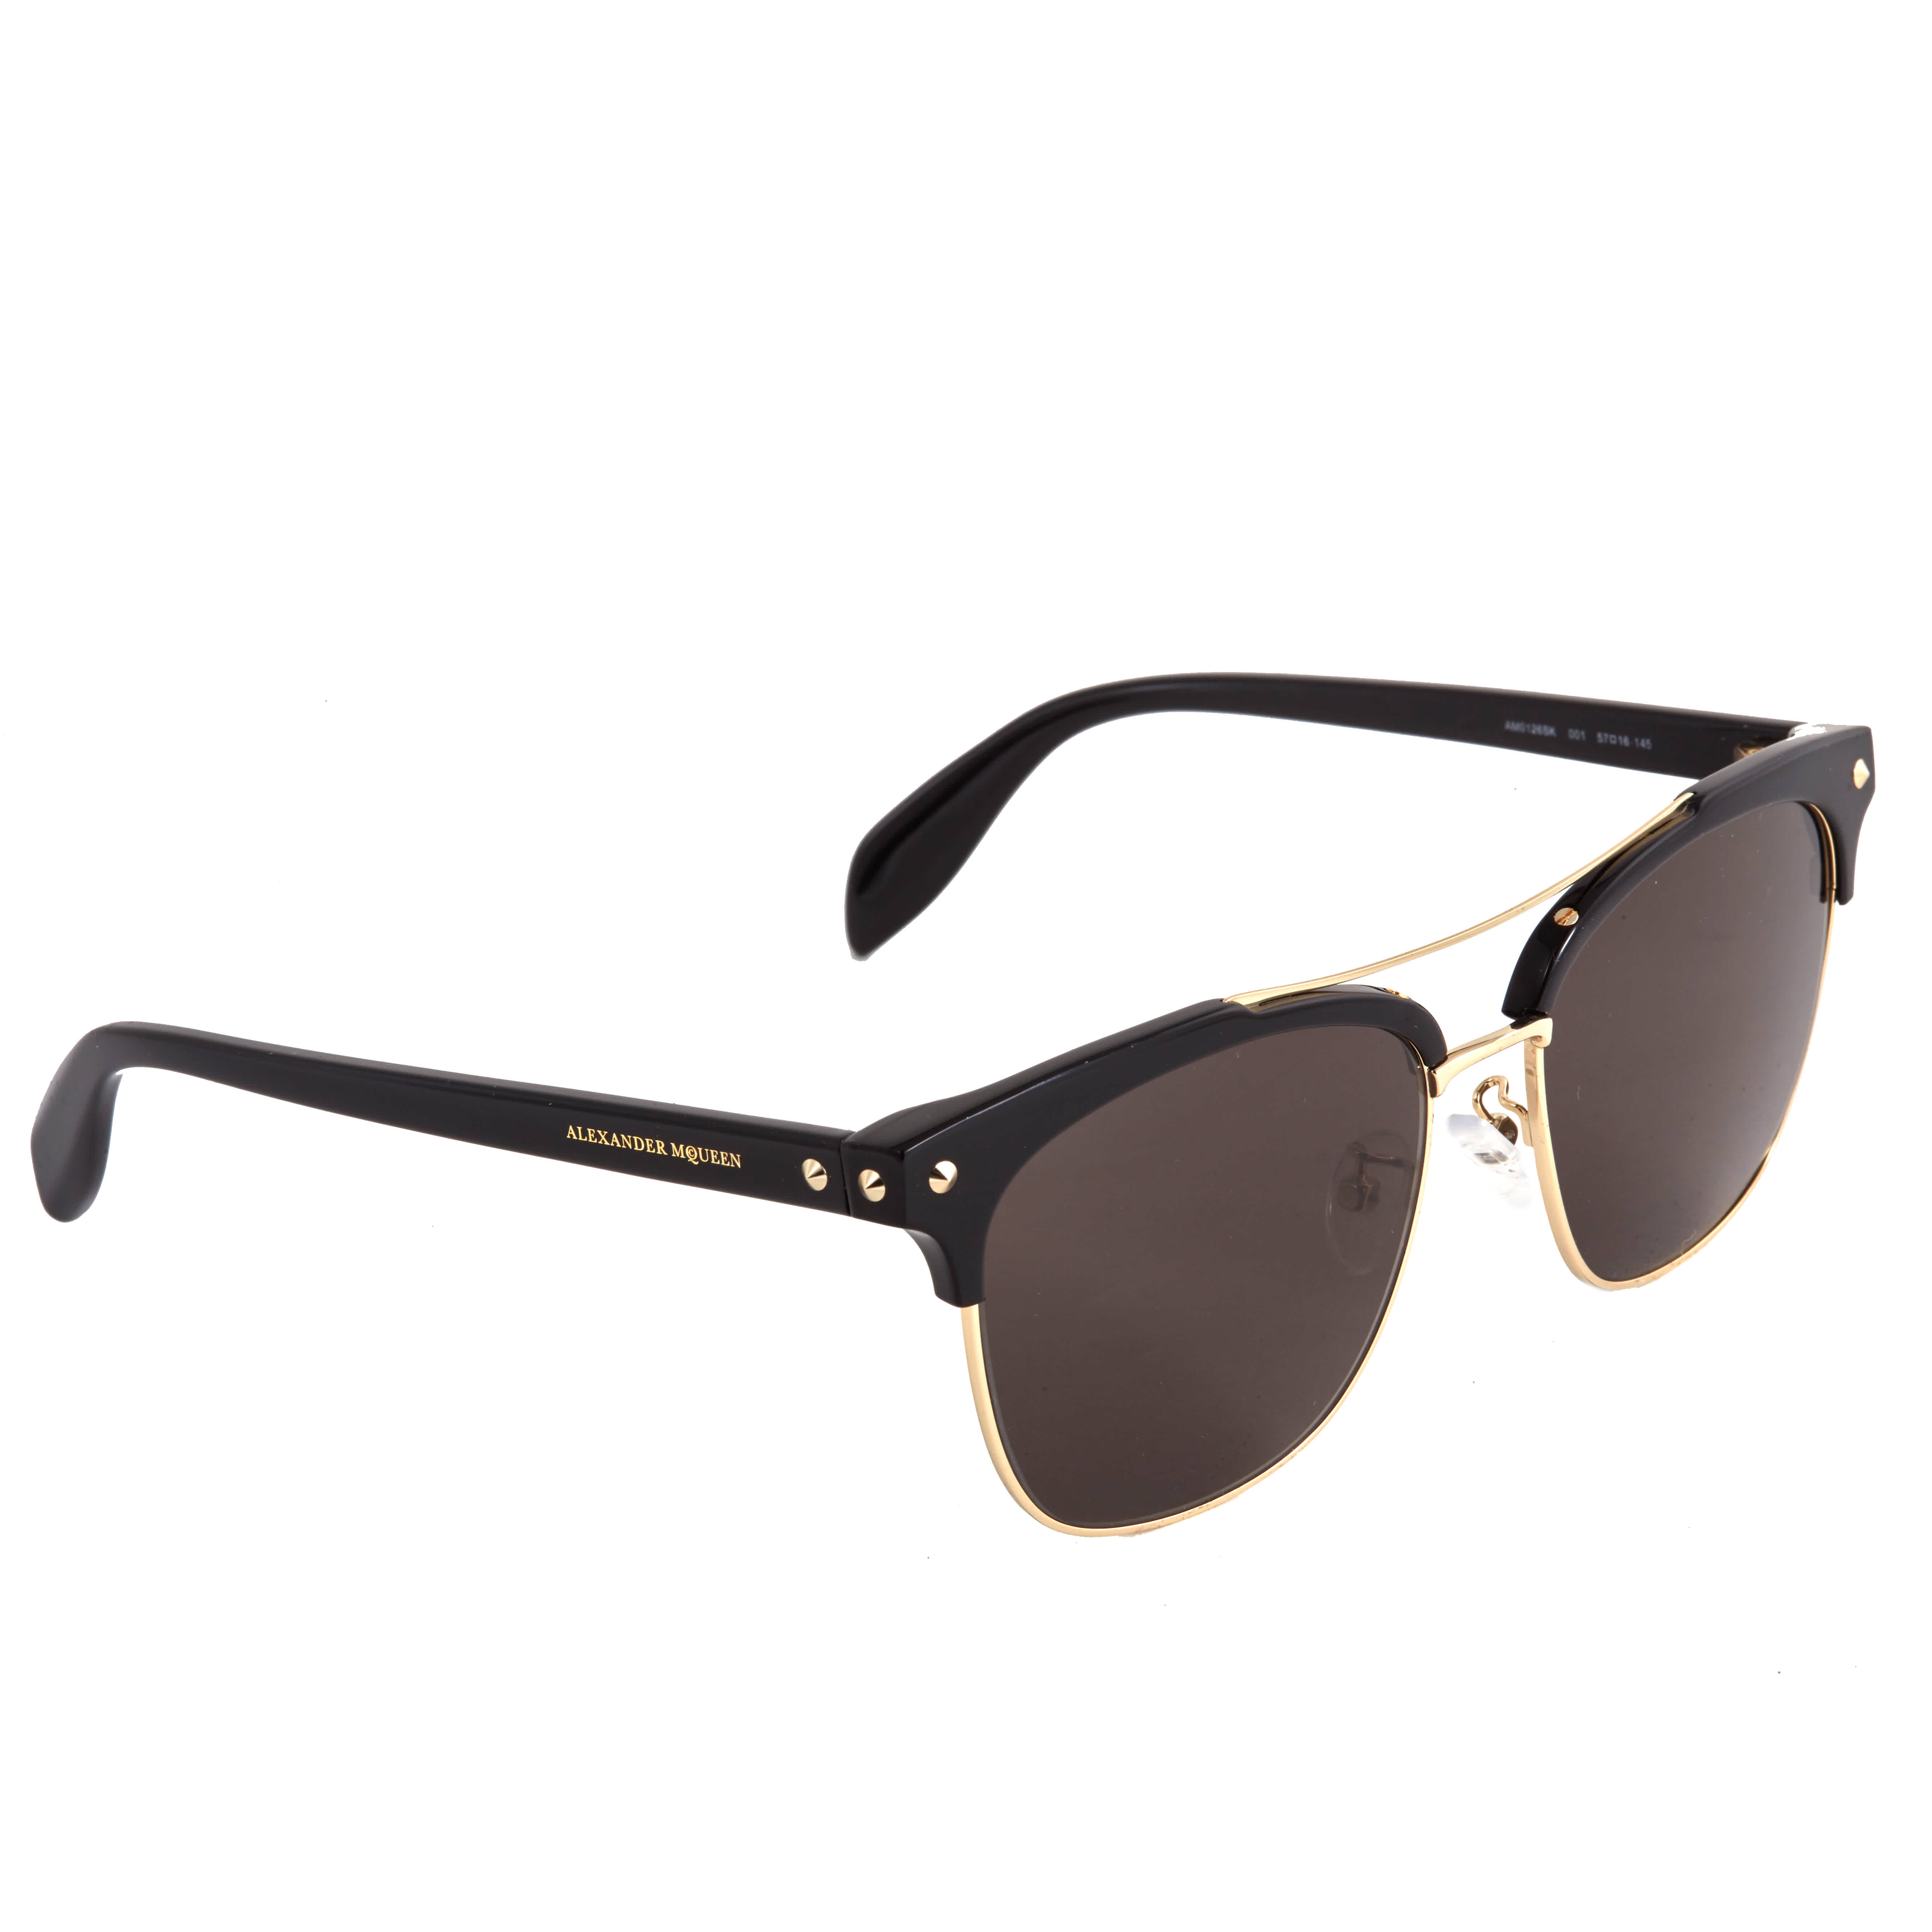 Alexander McQueen Ladies Sunglasses 